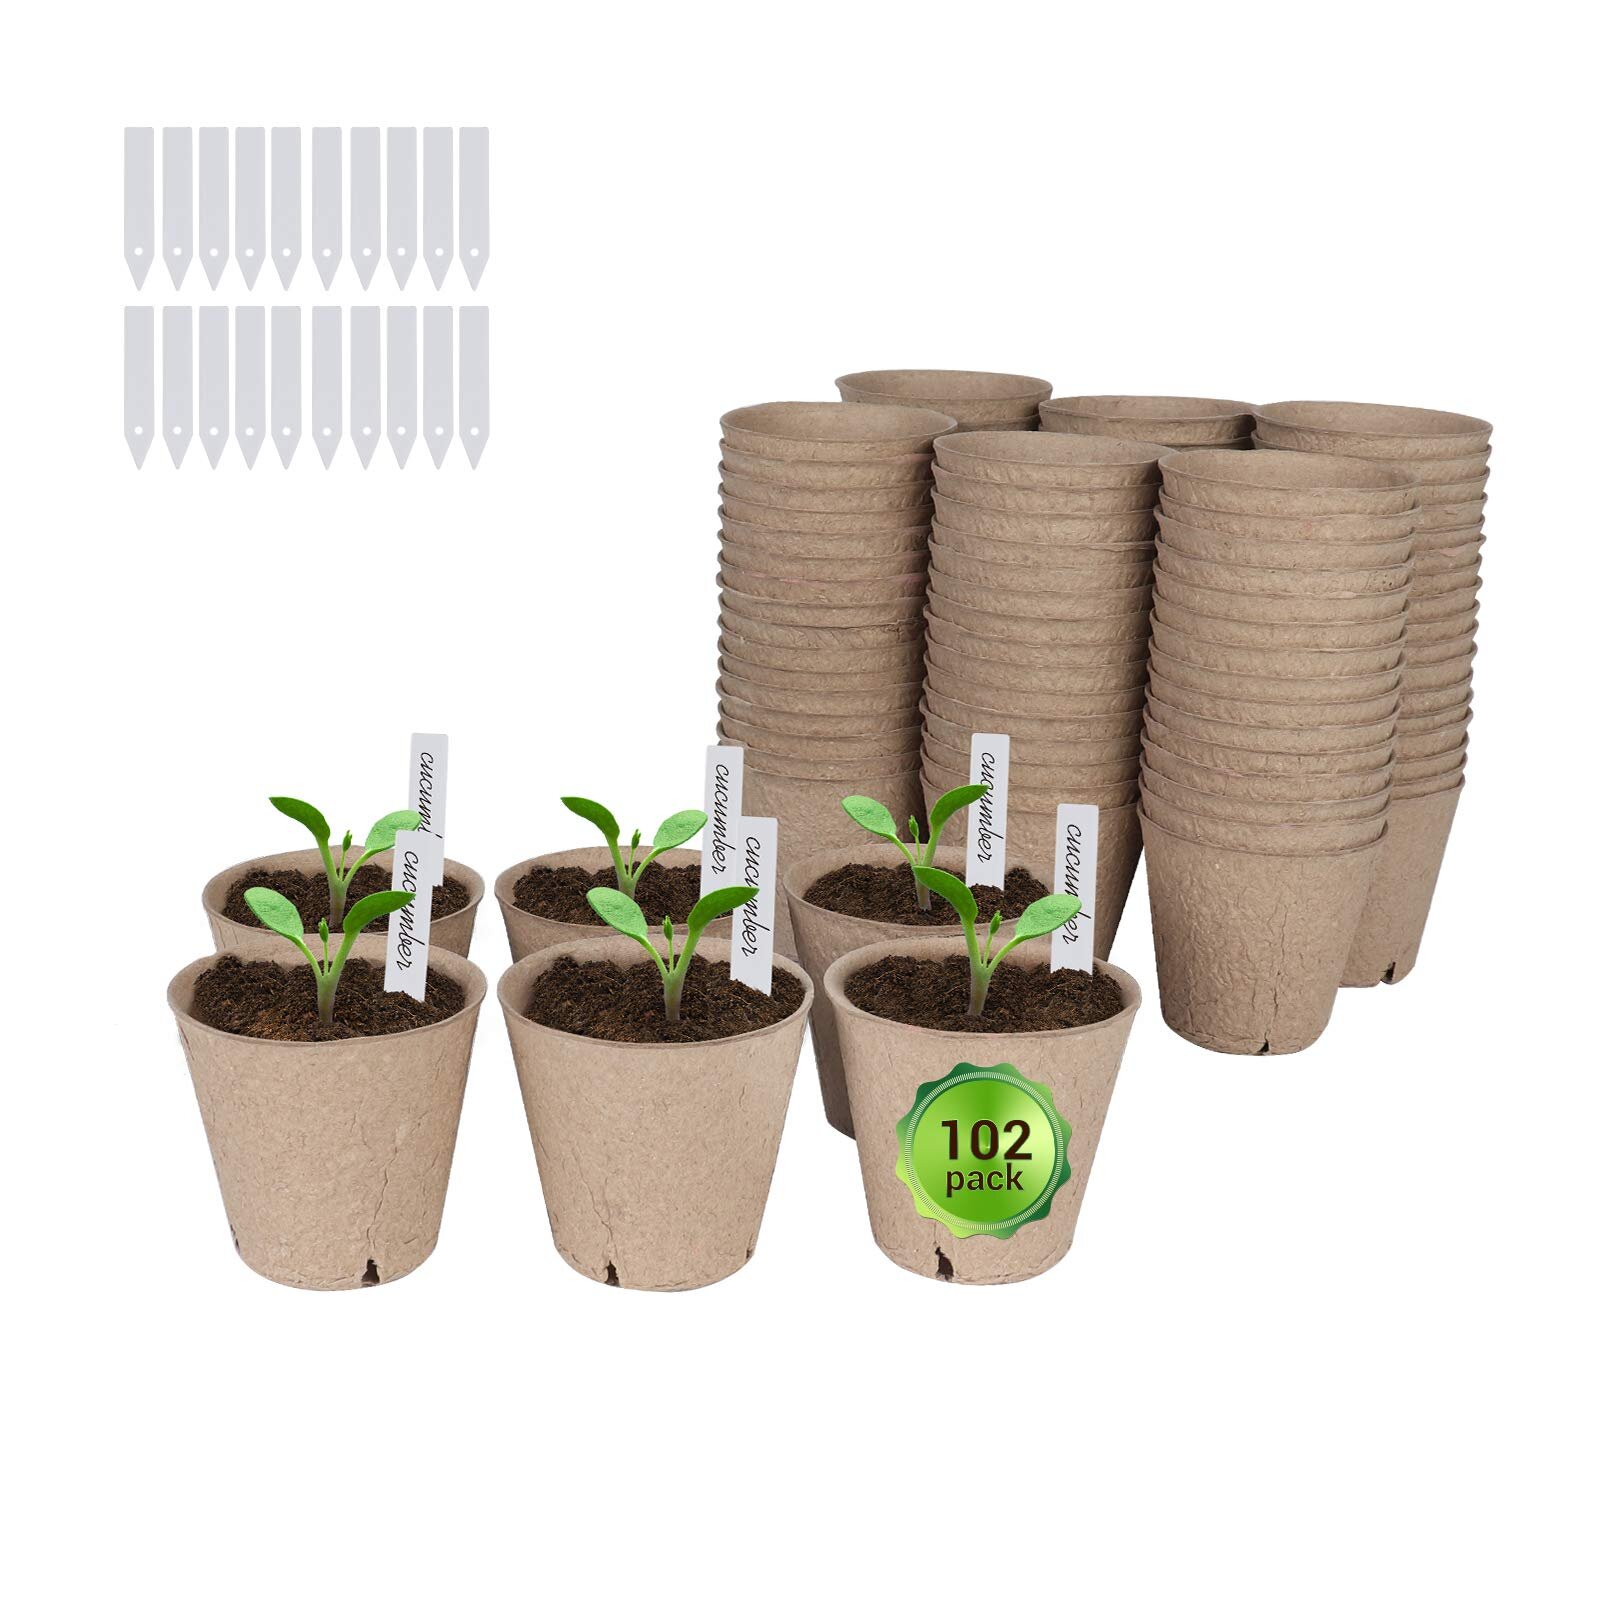 Biodegradable Seed Starter Trays Kit for Seedlings Durable 102 Pack Peat Pots 